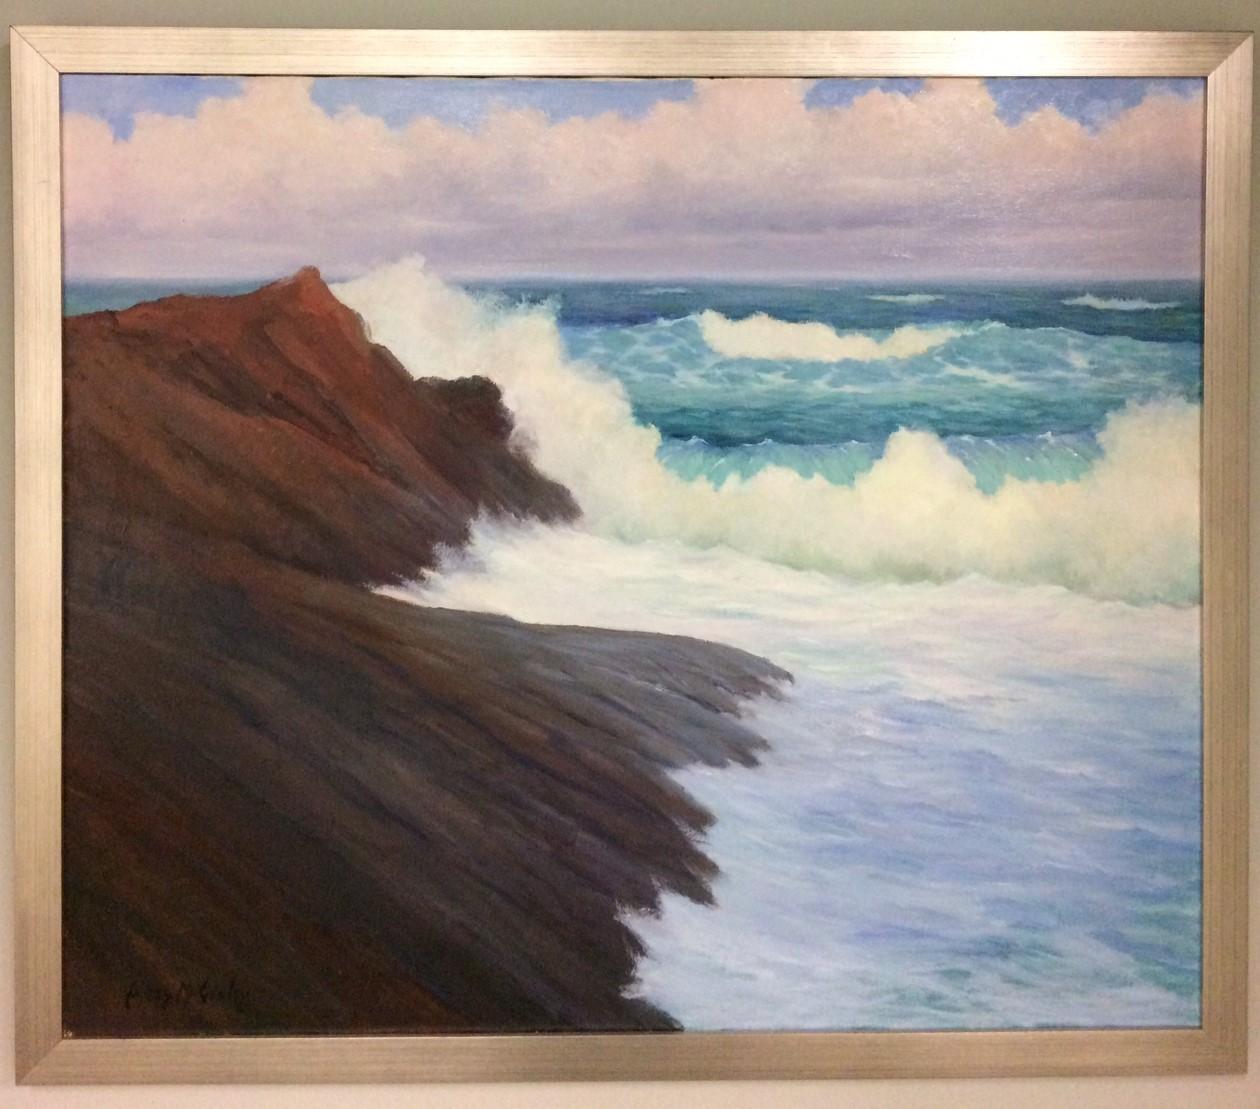 James McGinley Landscape Painting - Maine Surf, original 32X38 impressionist marine landscape